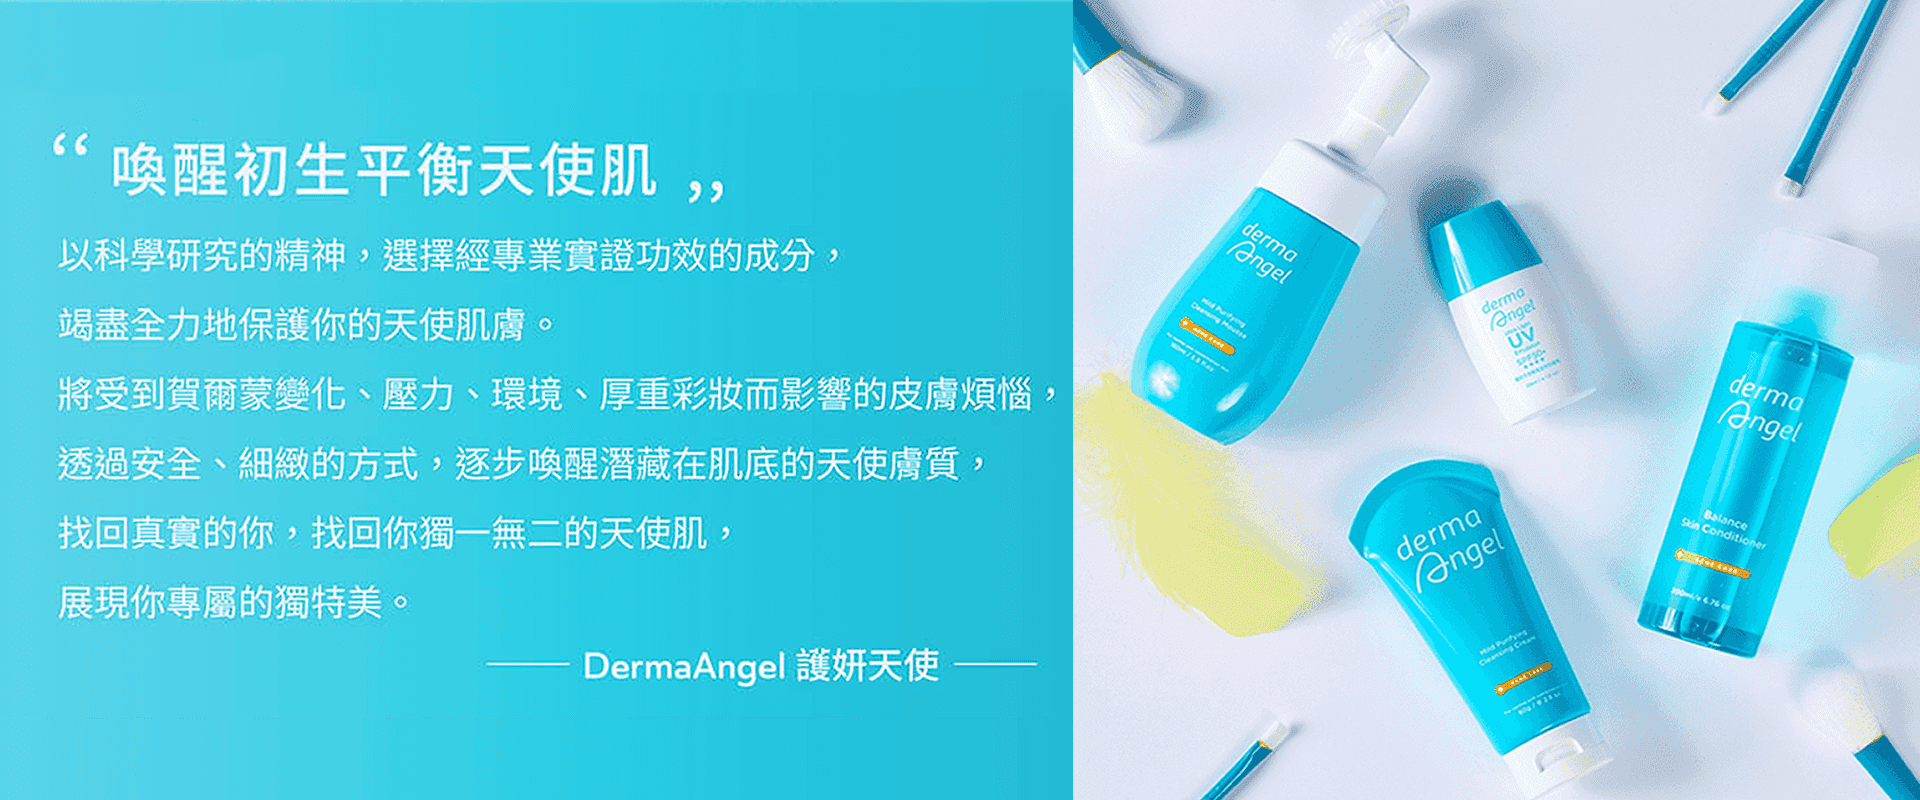 UNIVERSO MART，宇碩協銷有限公司的熱銷系列,台灣 護妍天使 derma Angel